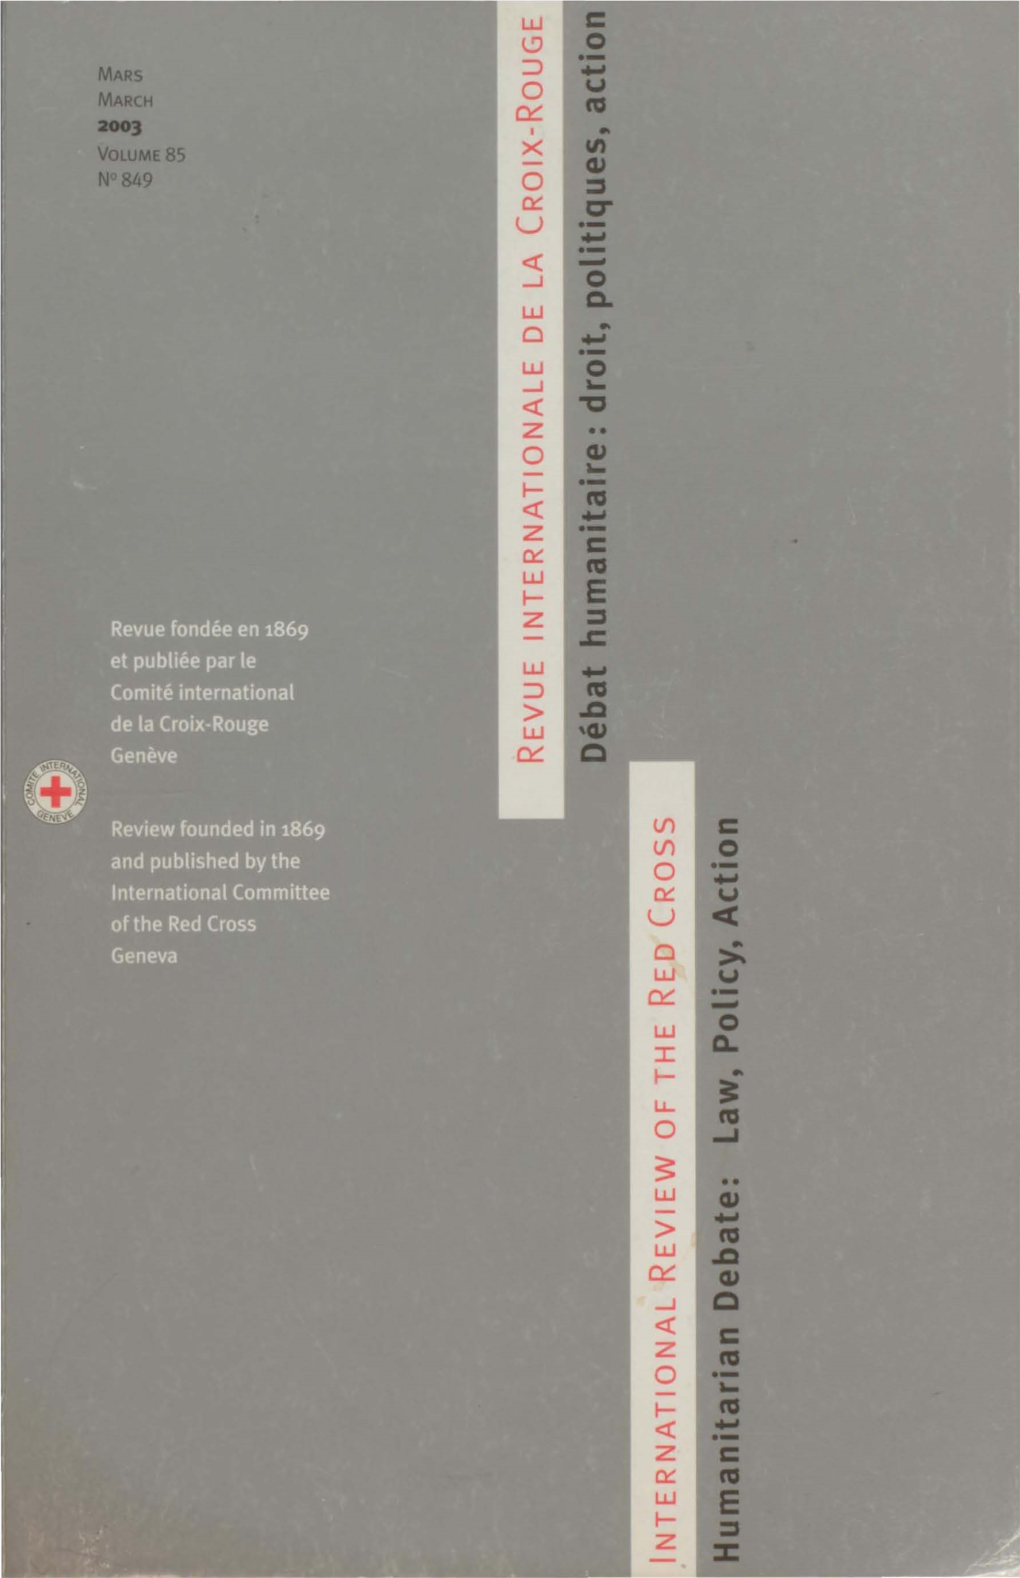 International Review of the Red Cross, Revue Internationale De La Croix-Rouge, March 2003, Mars 2003